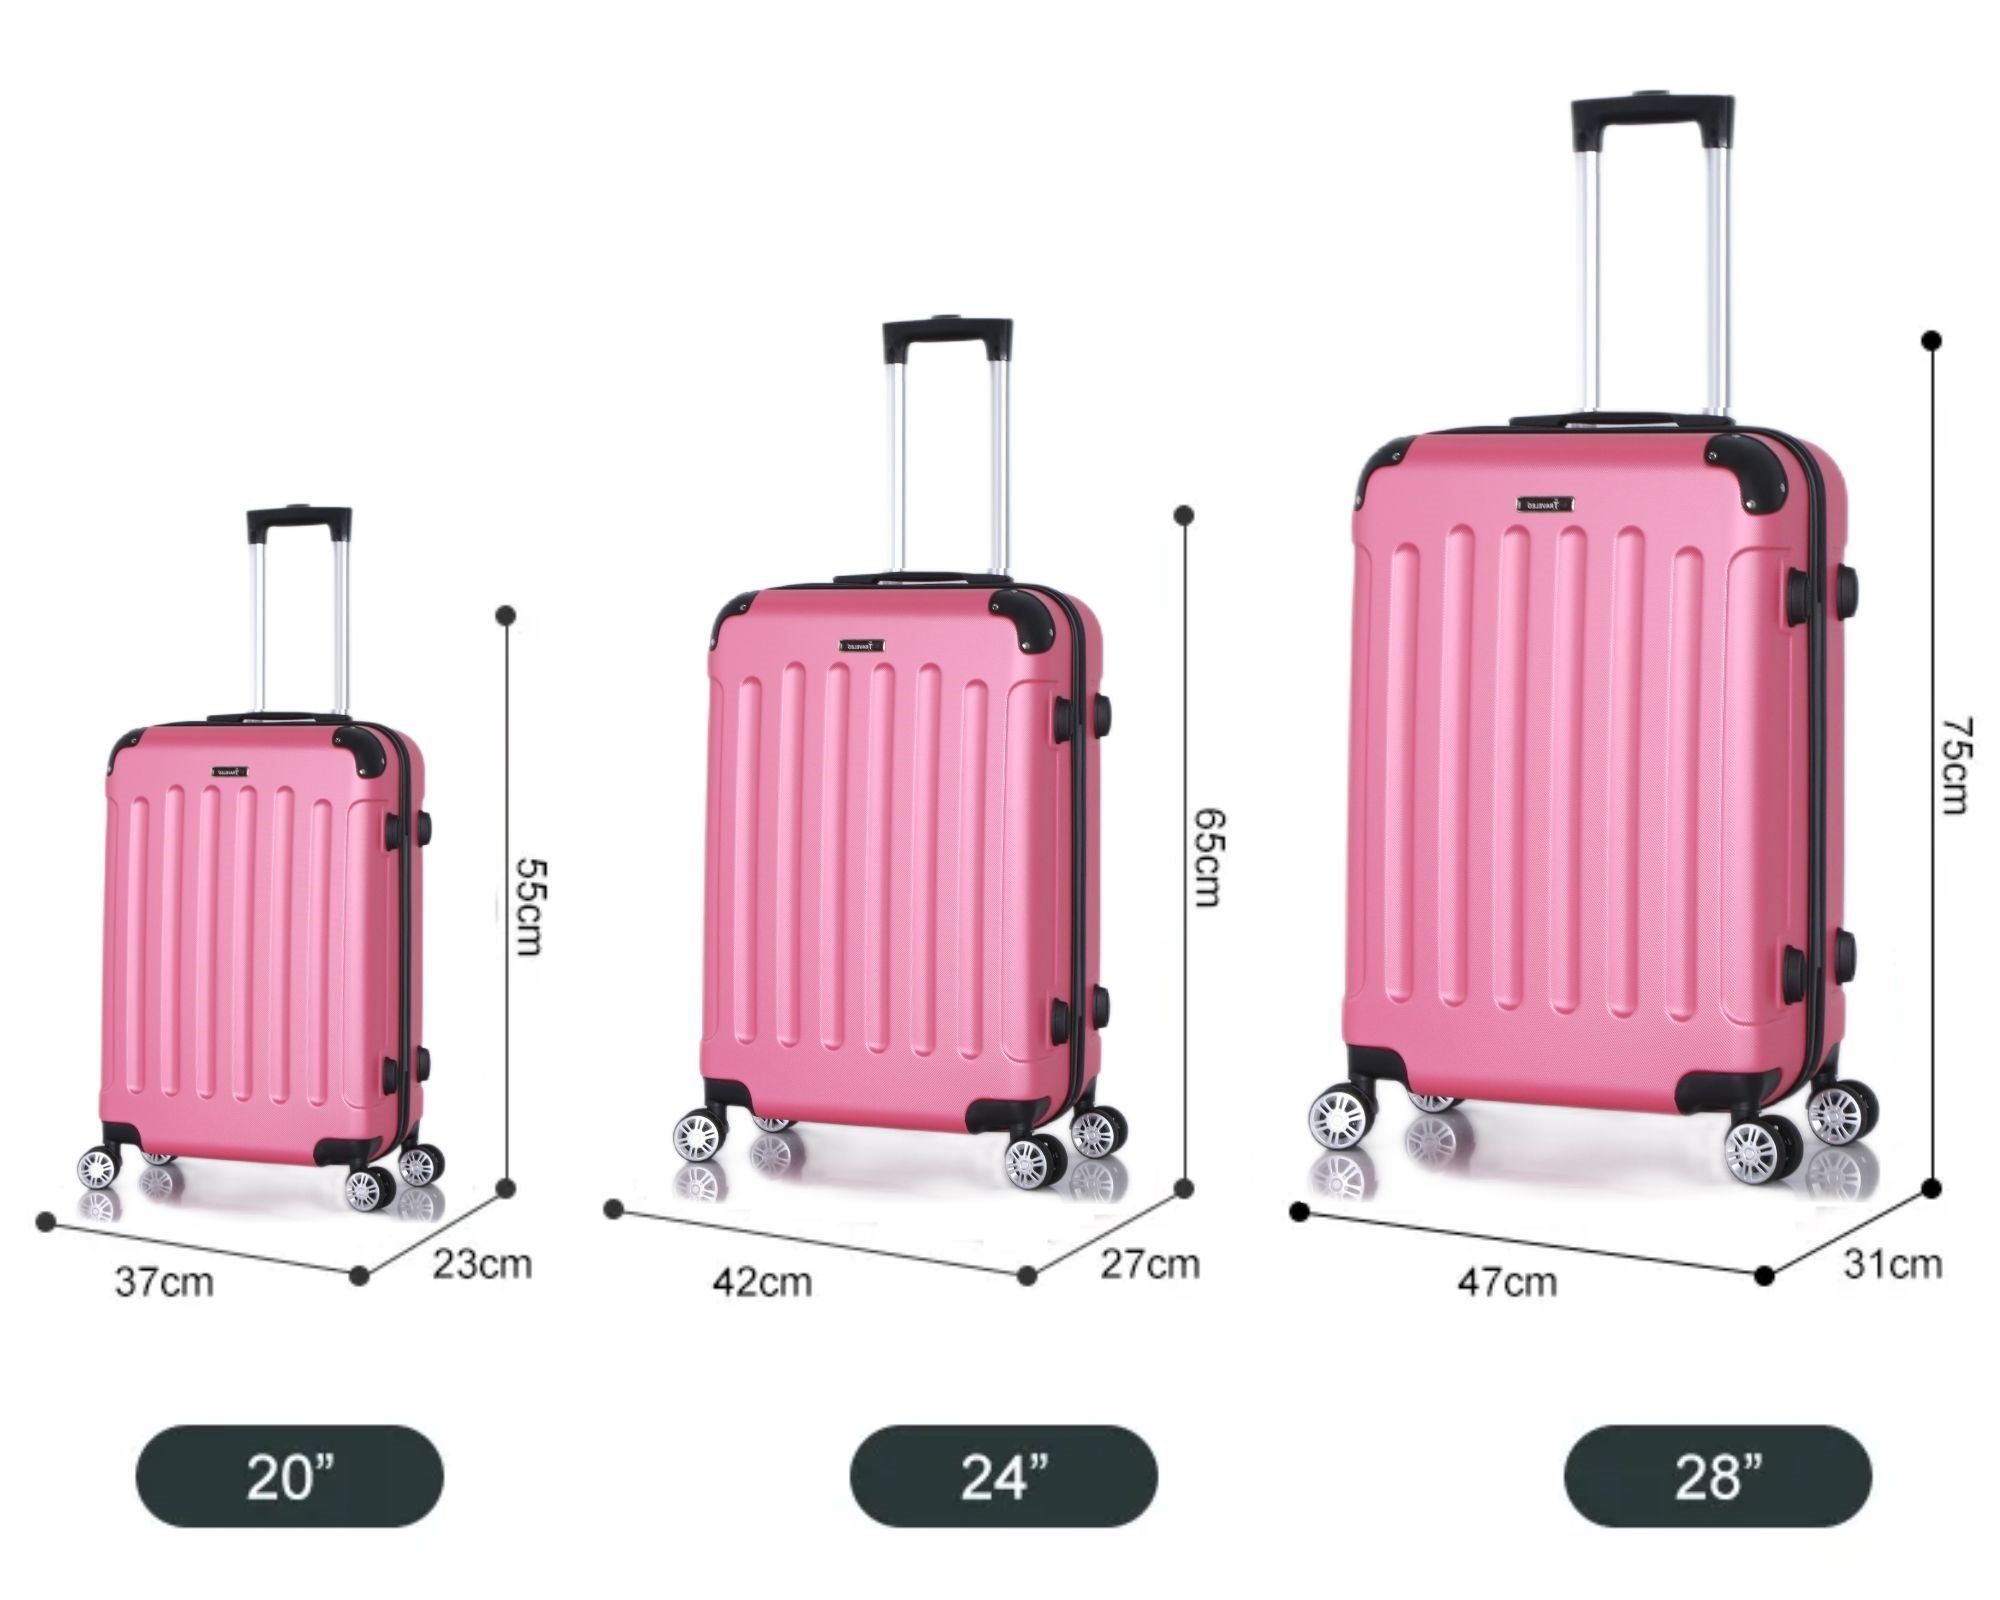 Rungassi Kofferset Hartschalenkoffer Trolley Rungassi Koffer ABS01 pink Reisekoffer Set